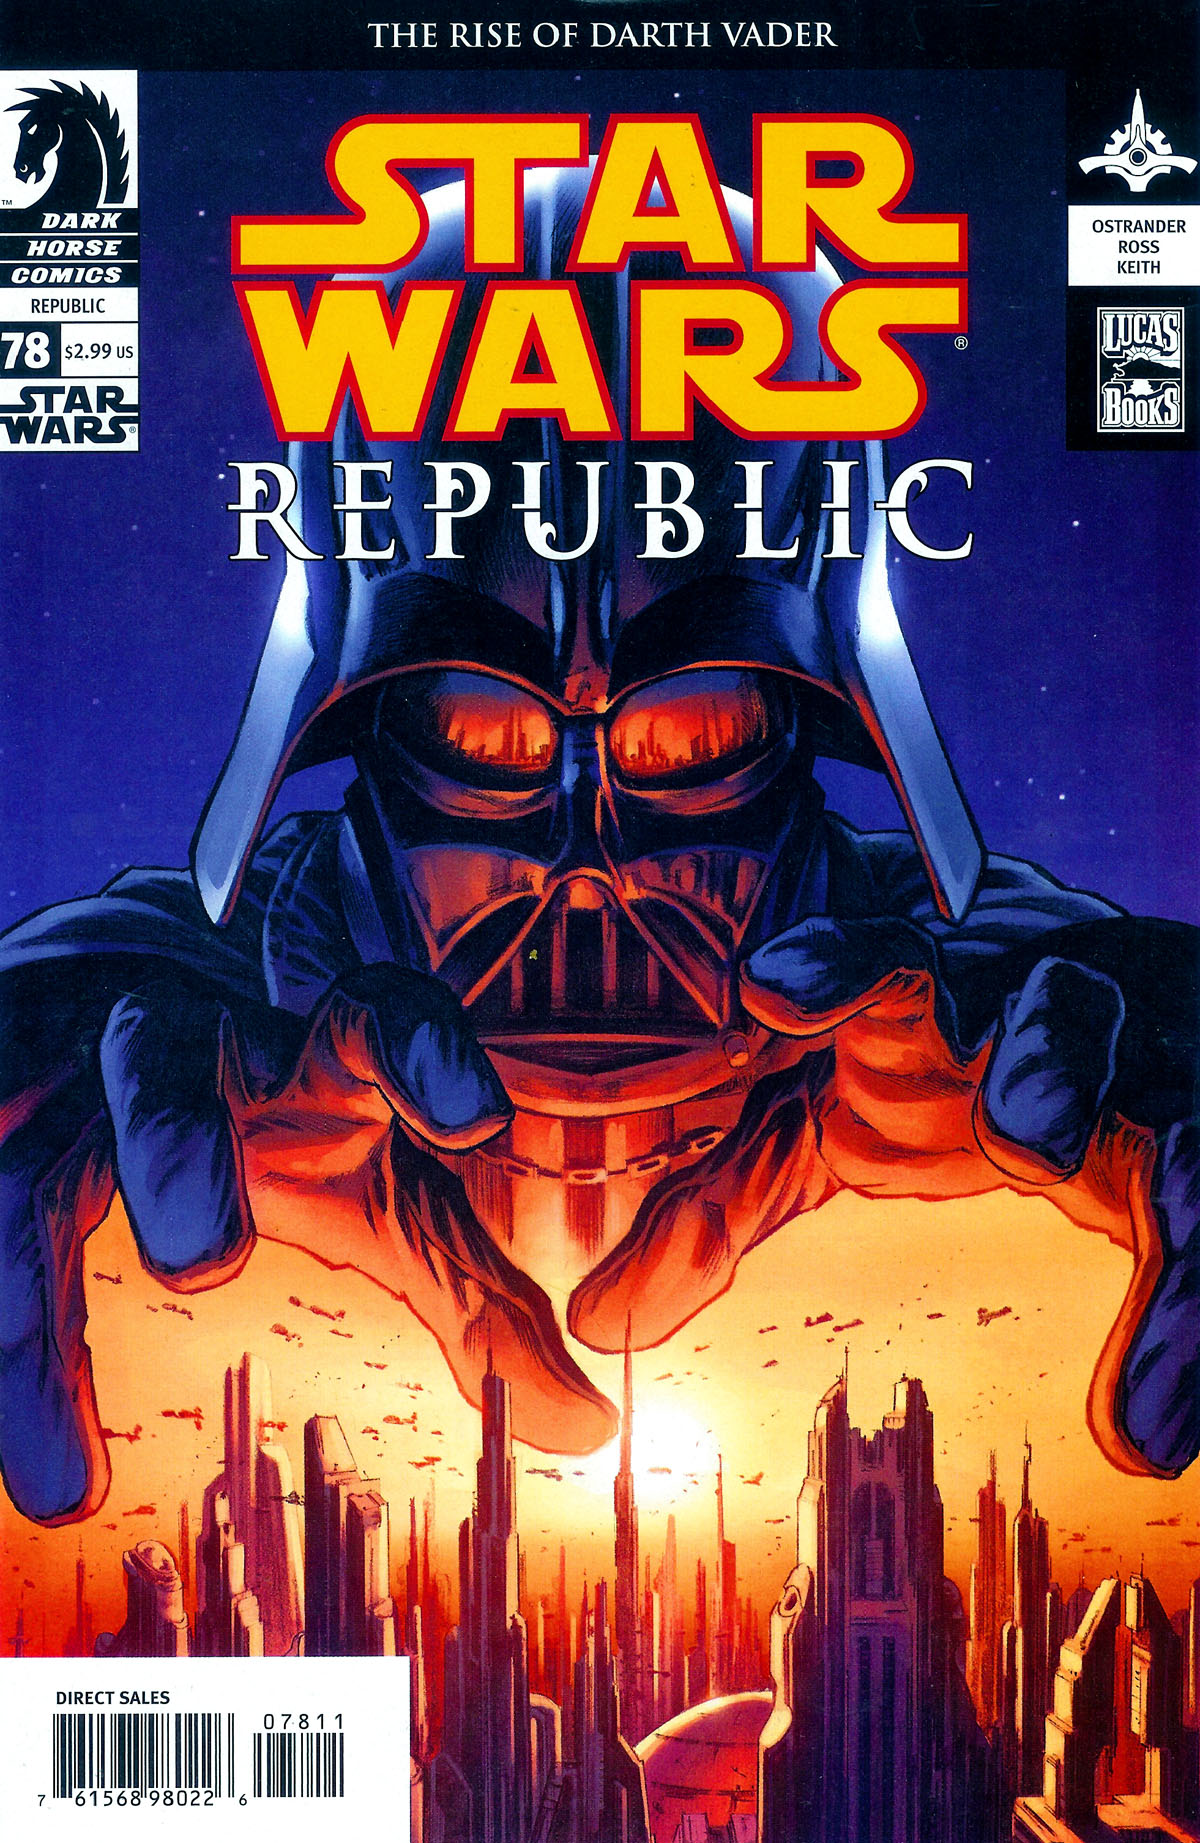 star wars high republic books in order